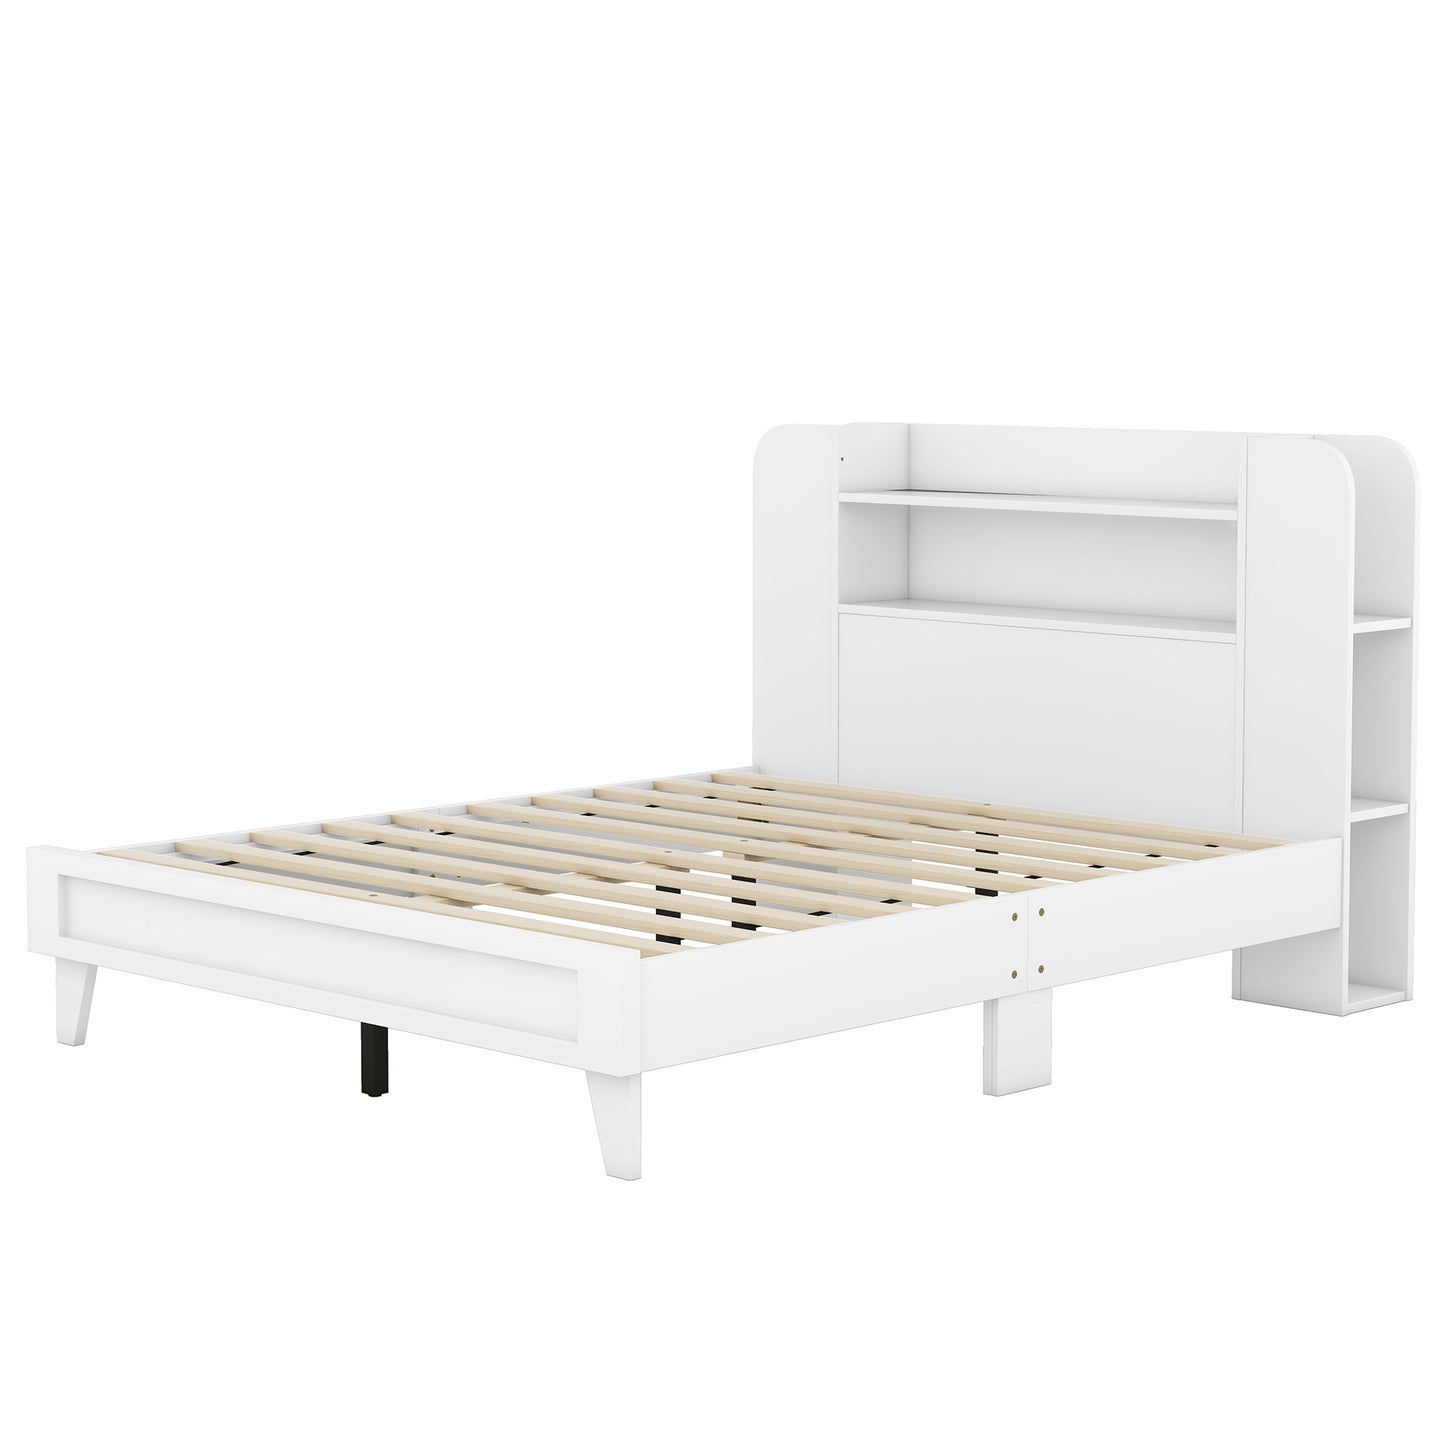 Full Size Platform Bed with Storage Headboard,Multiple Storage Shelves on Both Sides,White